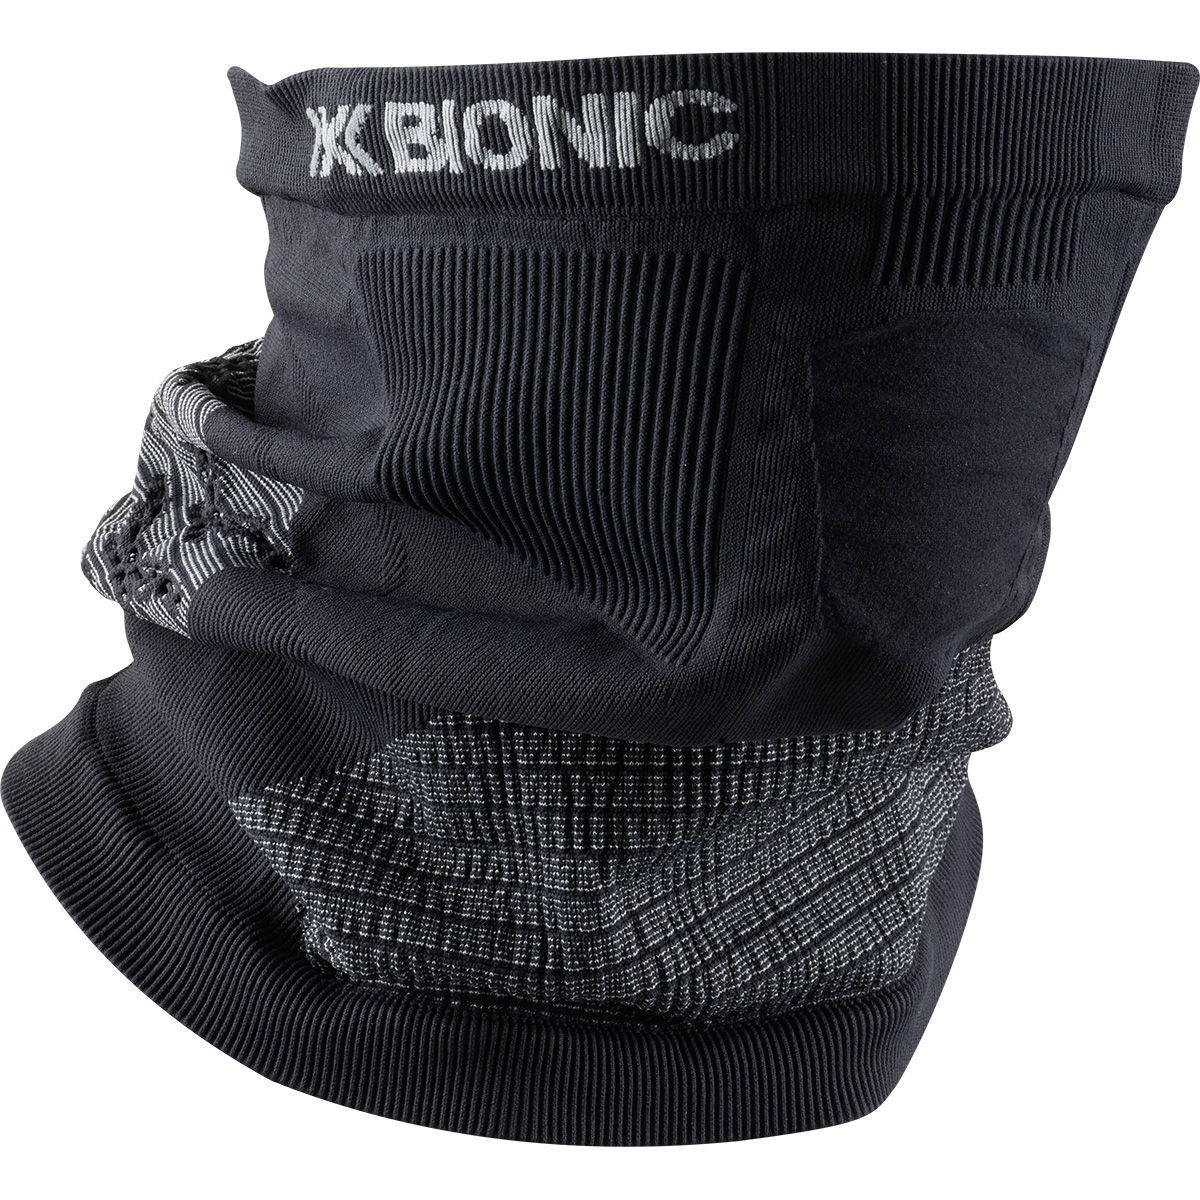 Cubrecuello X-bionic Neckwarmer 4.0 - gris - 